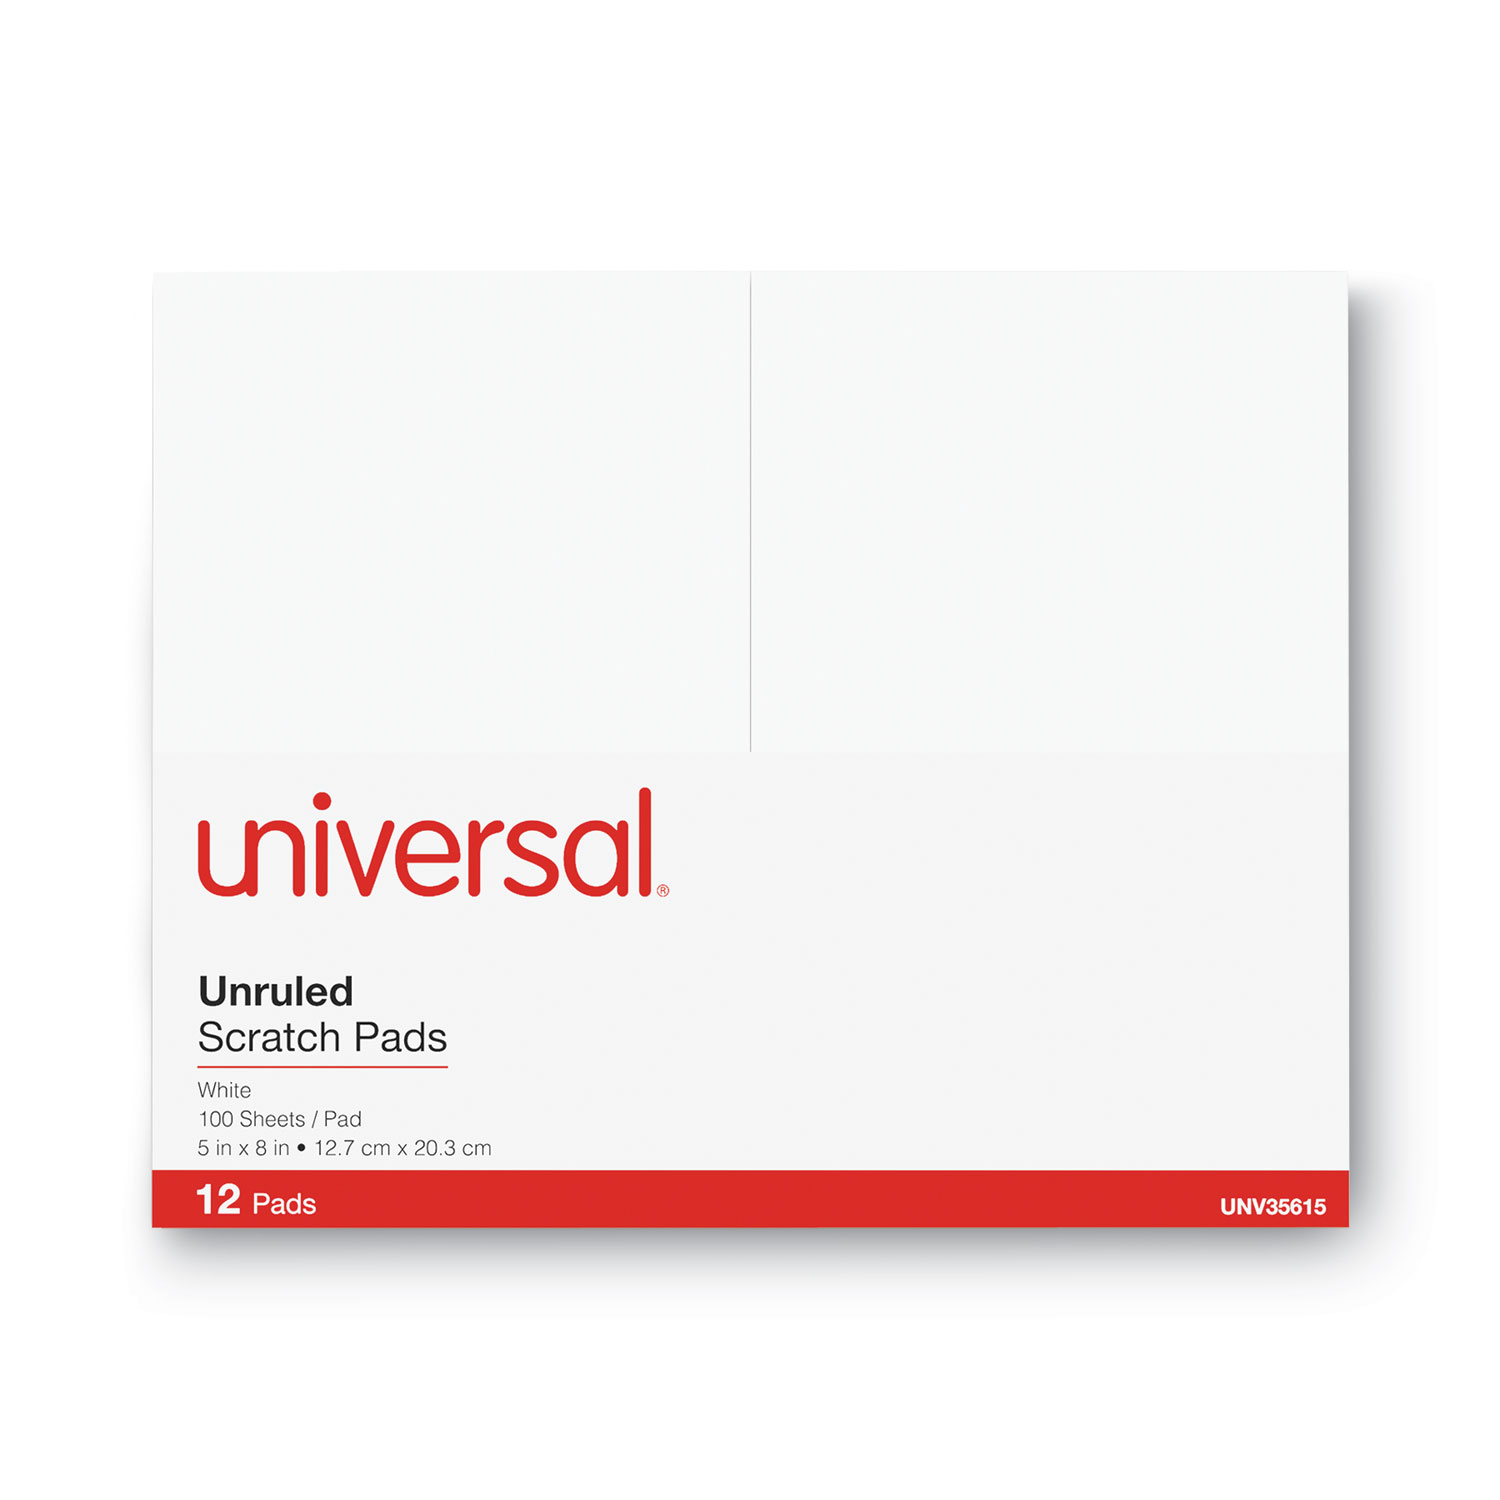 Scratch Pads by Universal® UNV35614